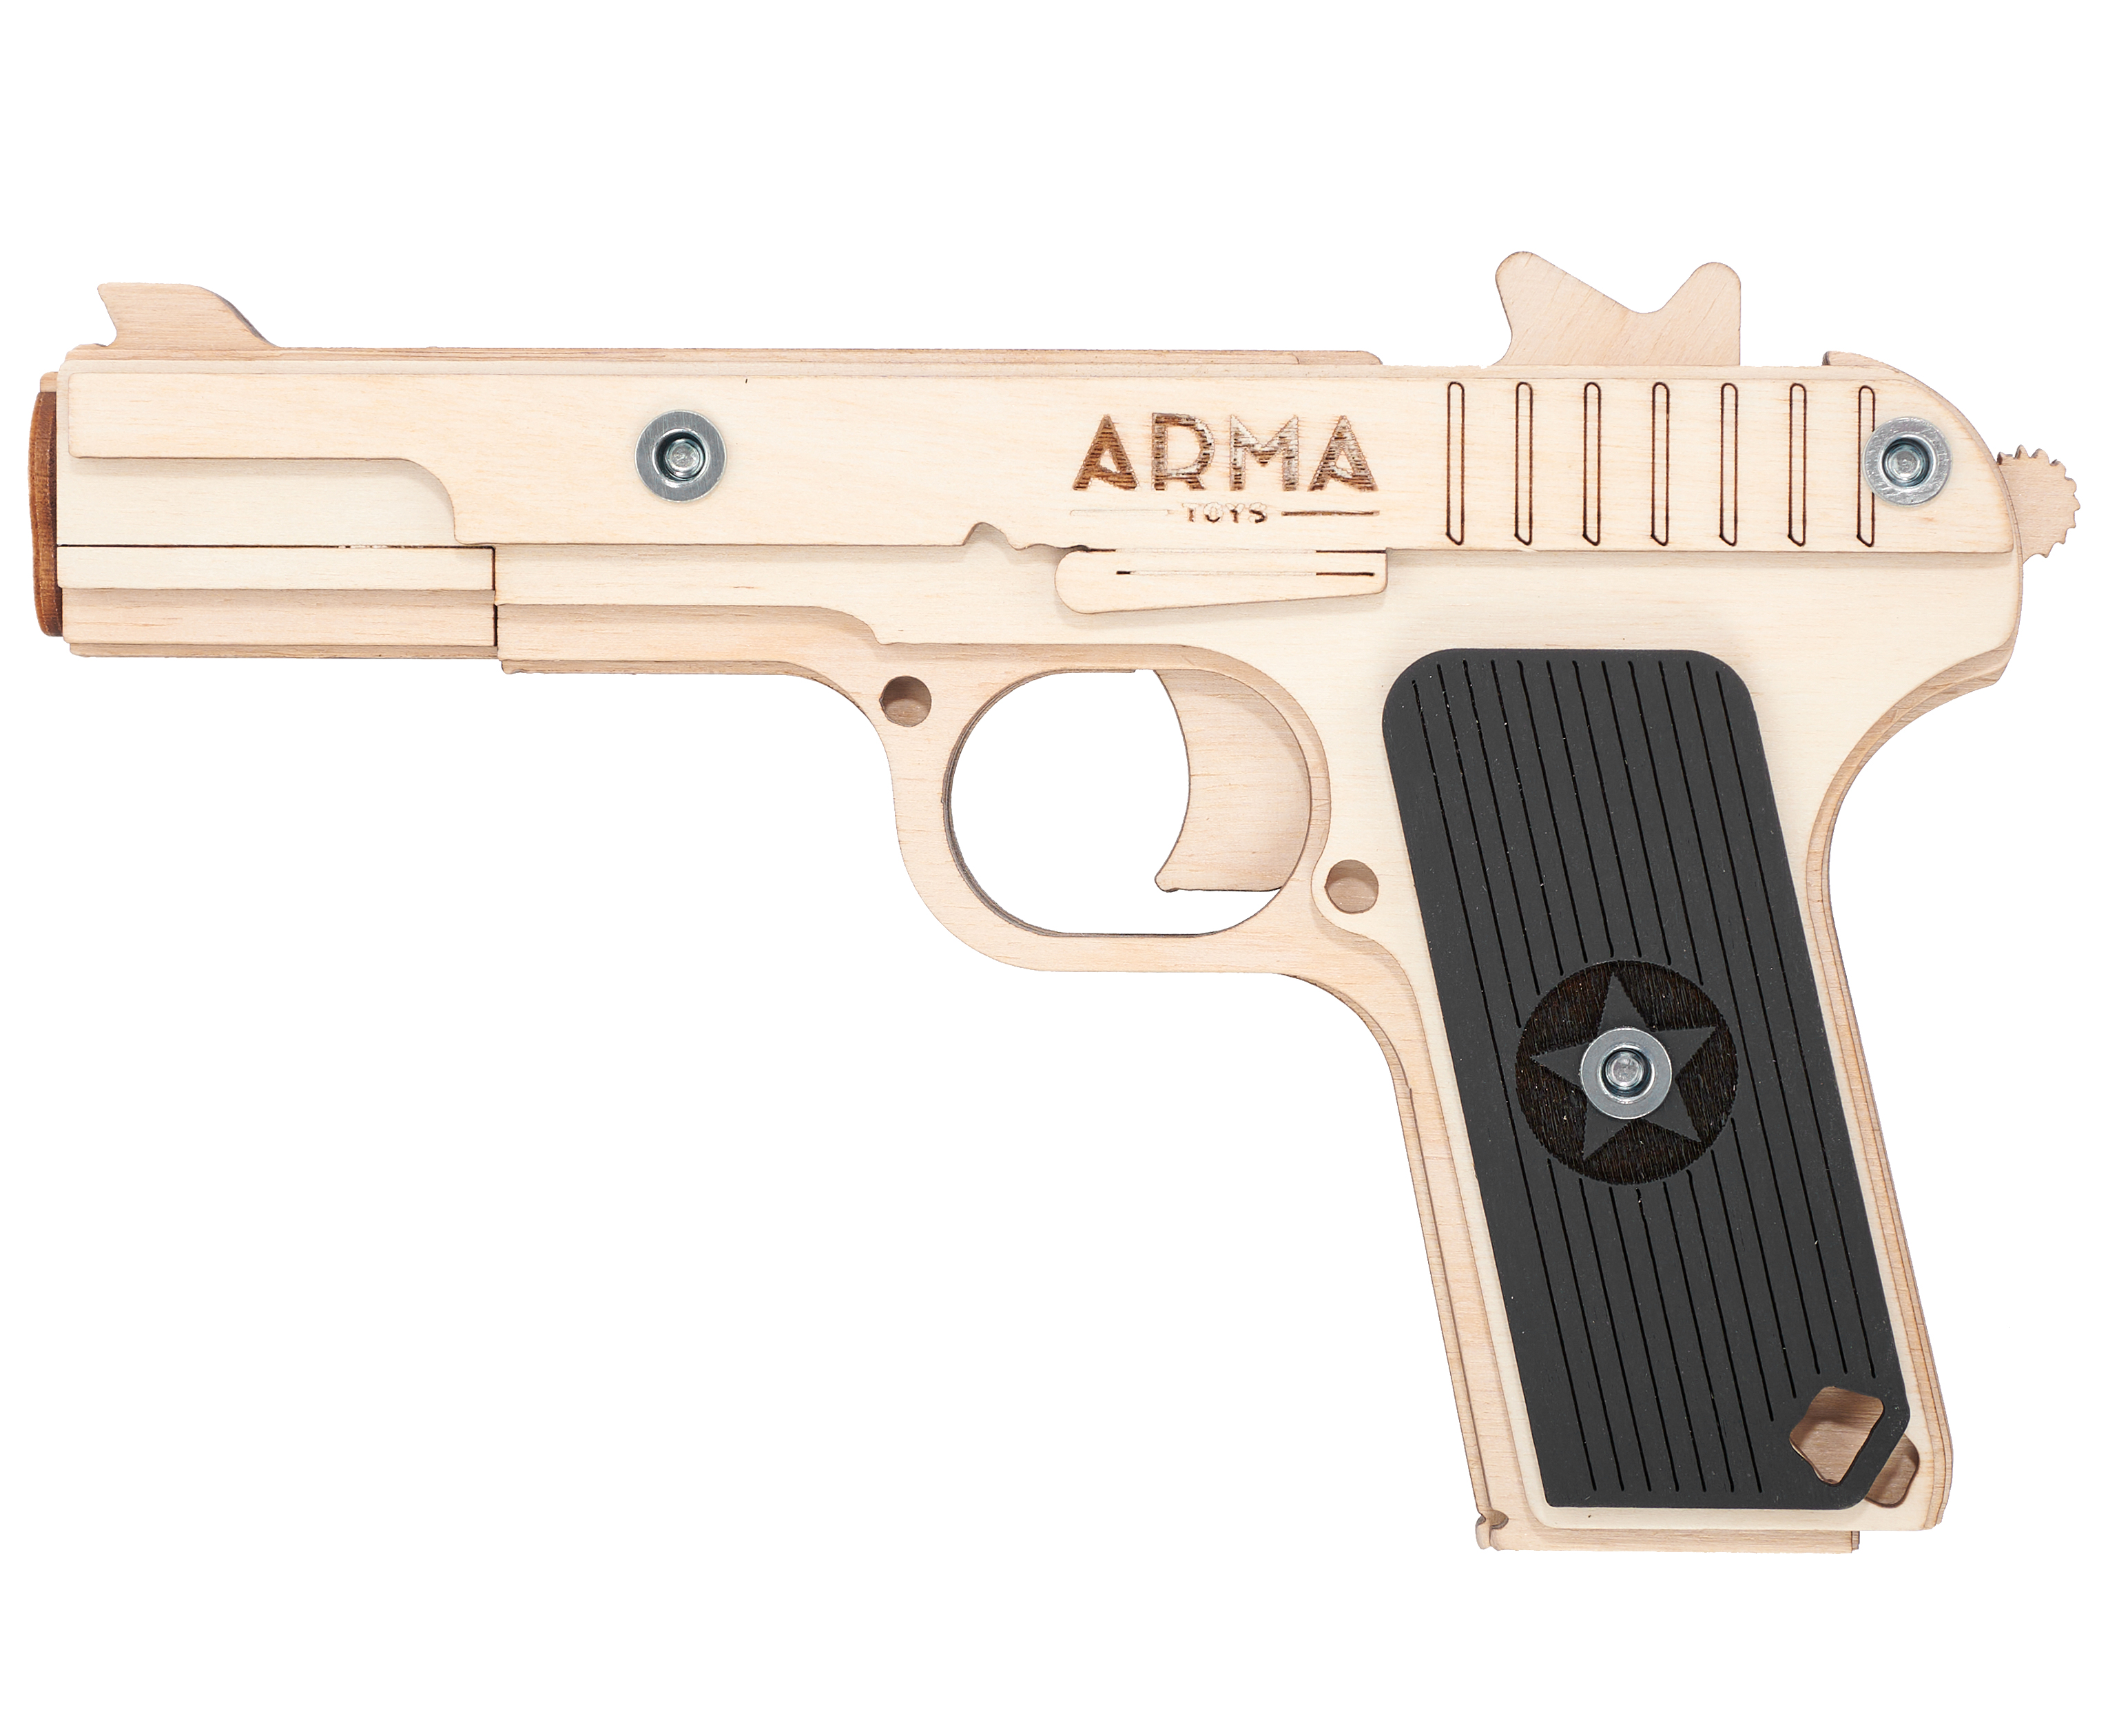 Резинкострел игрушечный Arma toys пистолет ТТ макет, Токарев, AT019 резинкострел игрушечный arma toys пистолет glock макет compact atl001